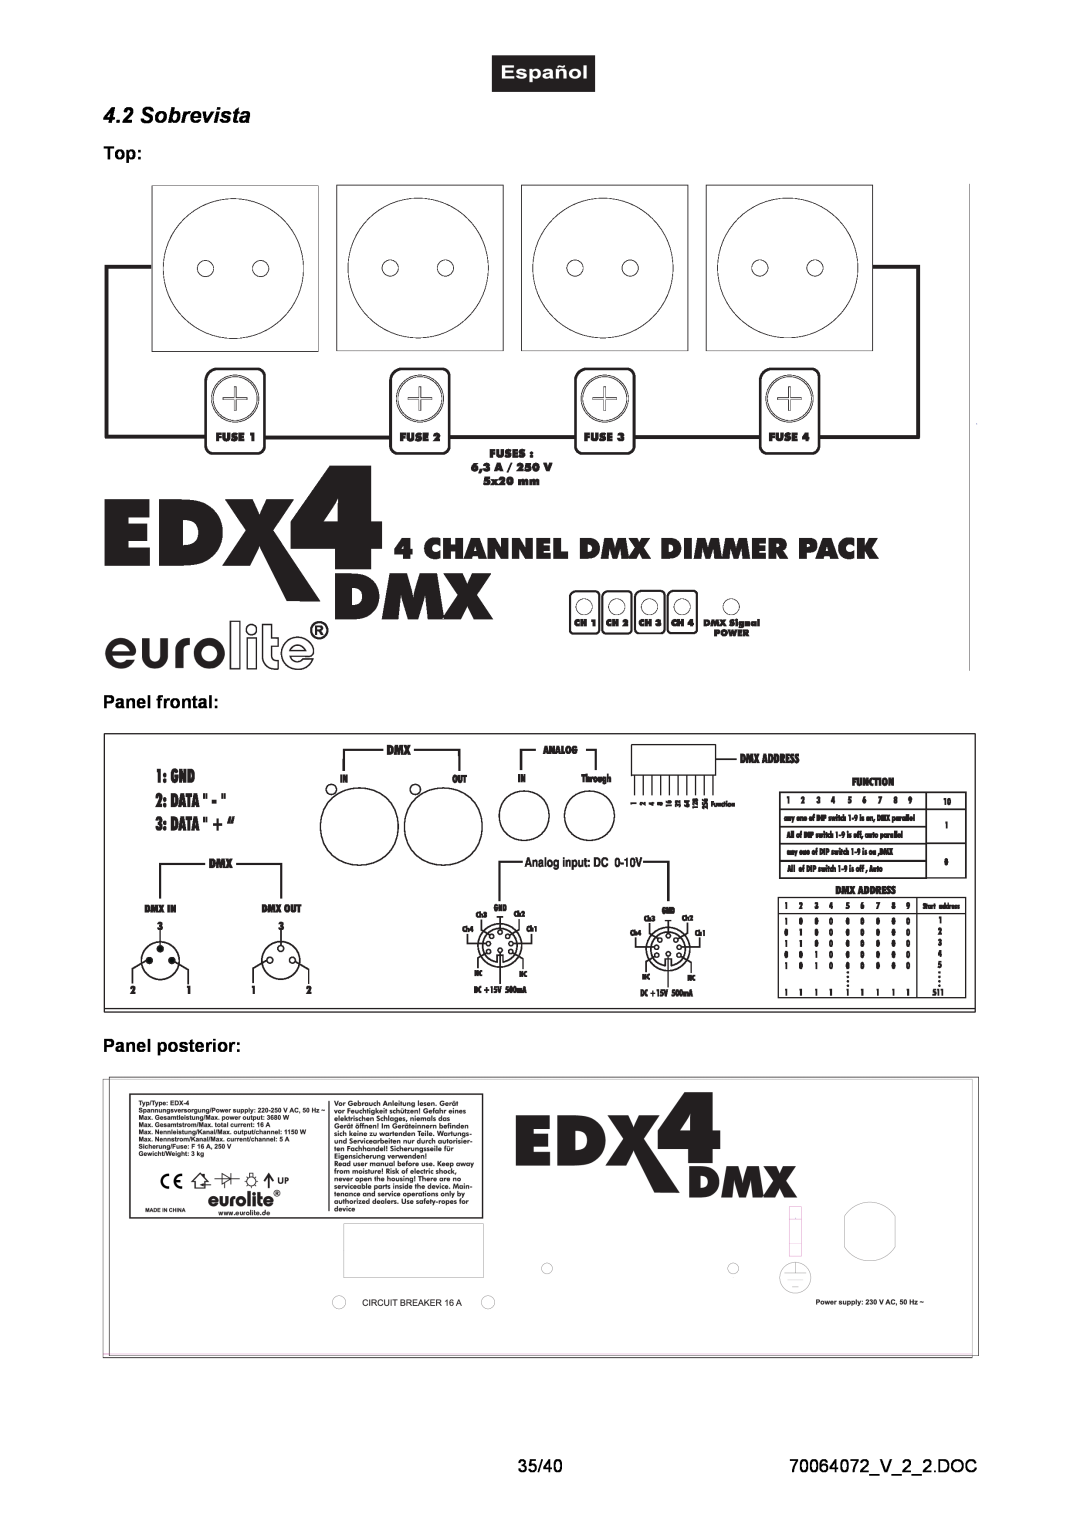 EuroLite Cases 4-channel DMX dimmer pack, EDX-4 user manual Sobrevista, eurolite, Top Panel frontal Panel posterior 